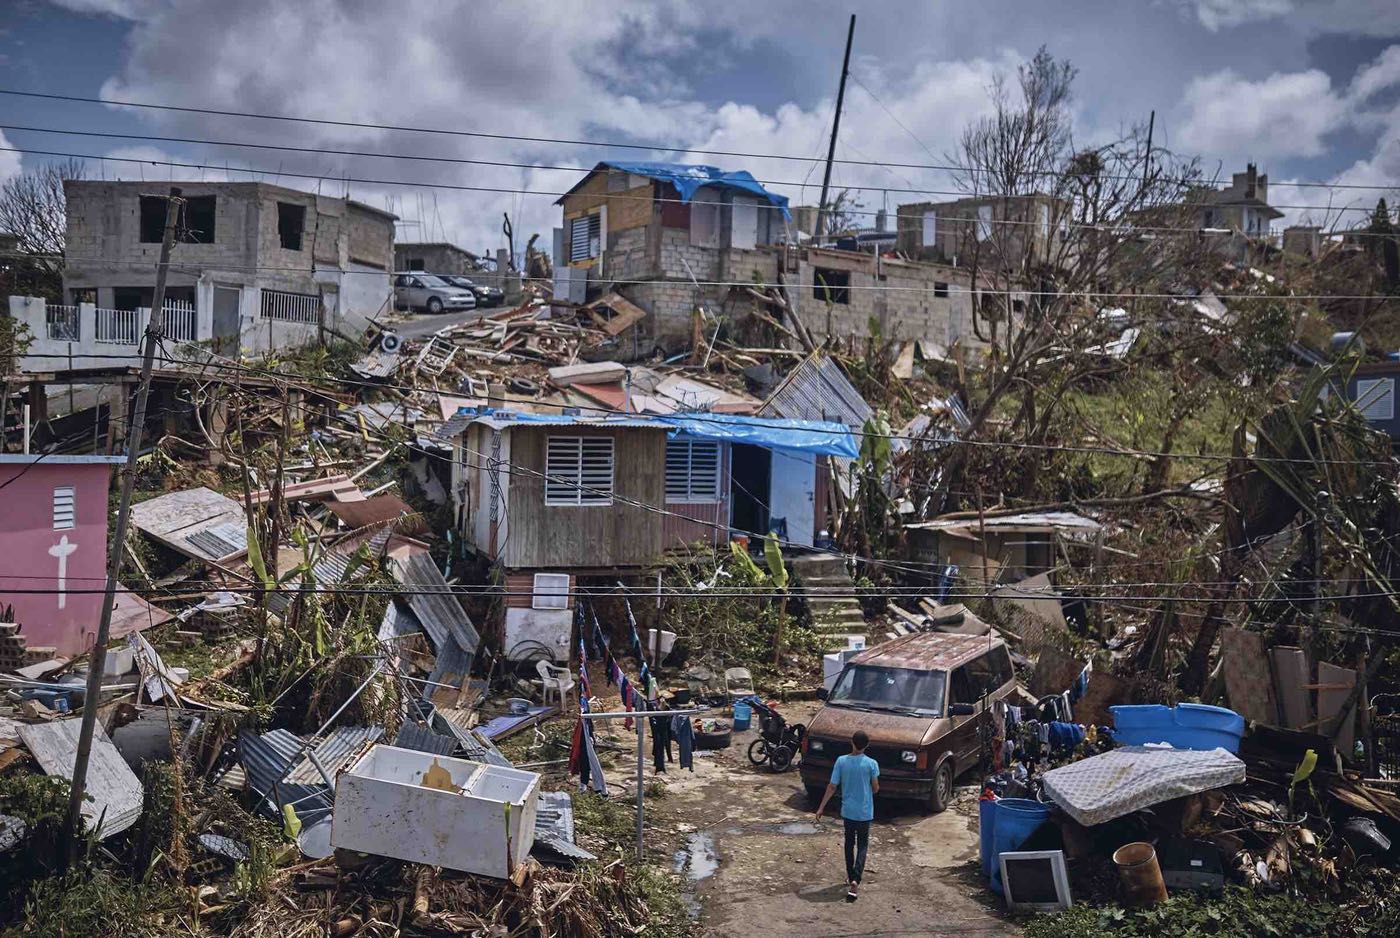 Neighborhood damaged by Hurricane Maria in September 2017.